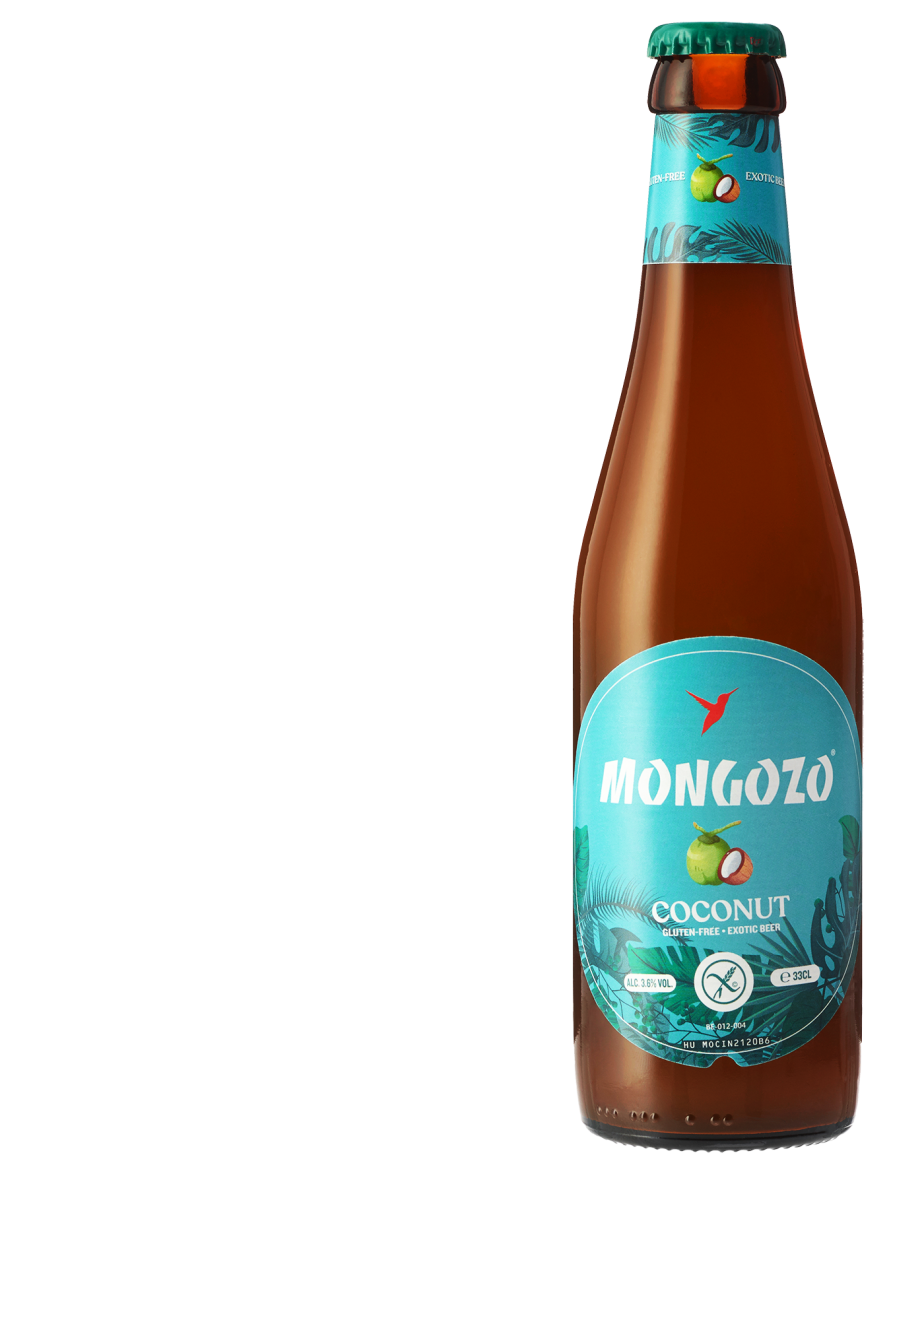 Mongozo coconut